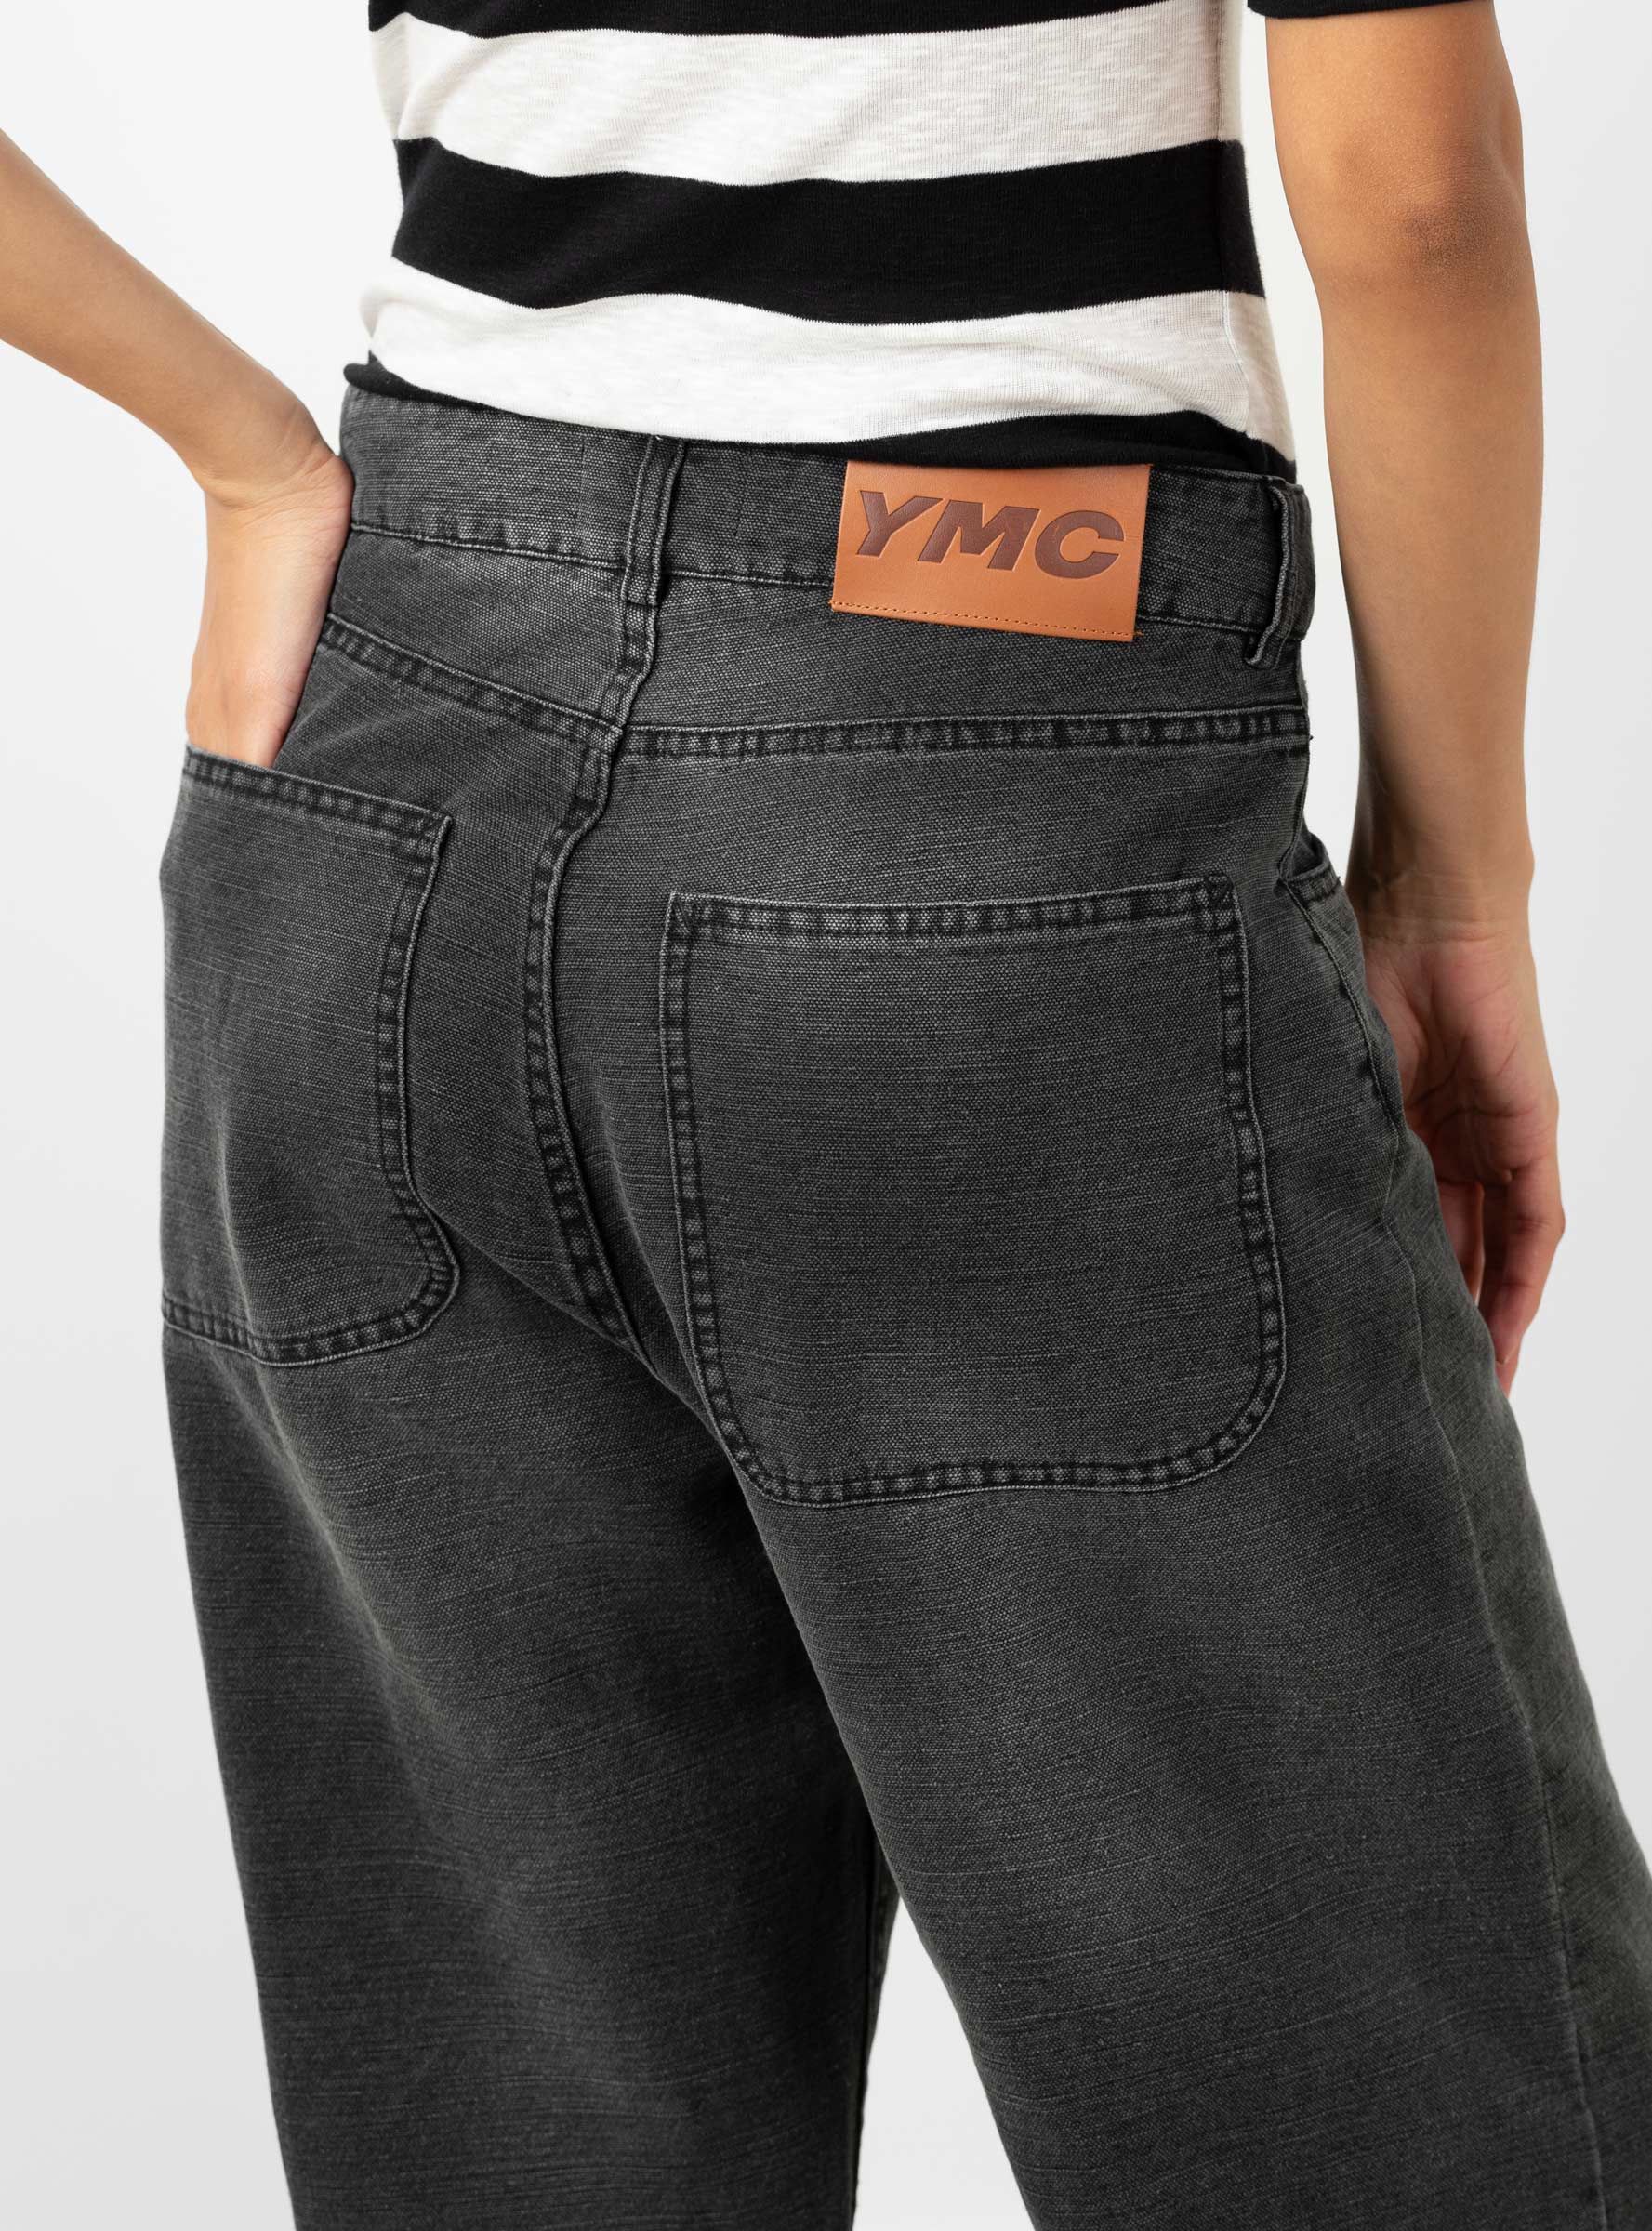 Ymc YMC Silver Jean Black - Size: Small